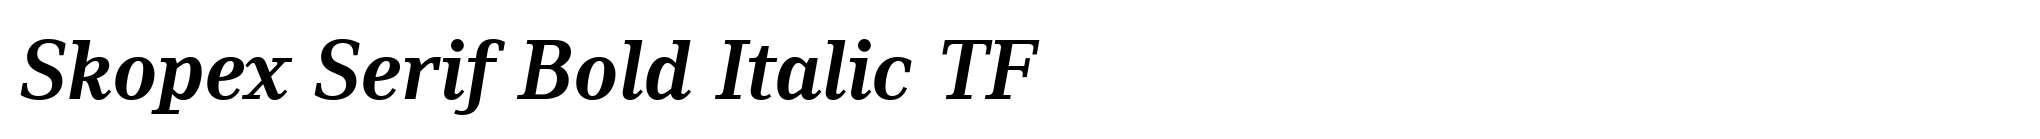 Skopex Serif Bold Italic TF image